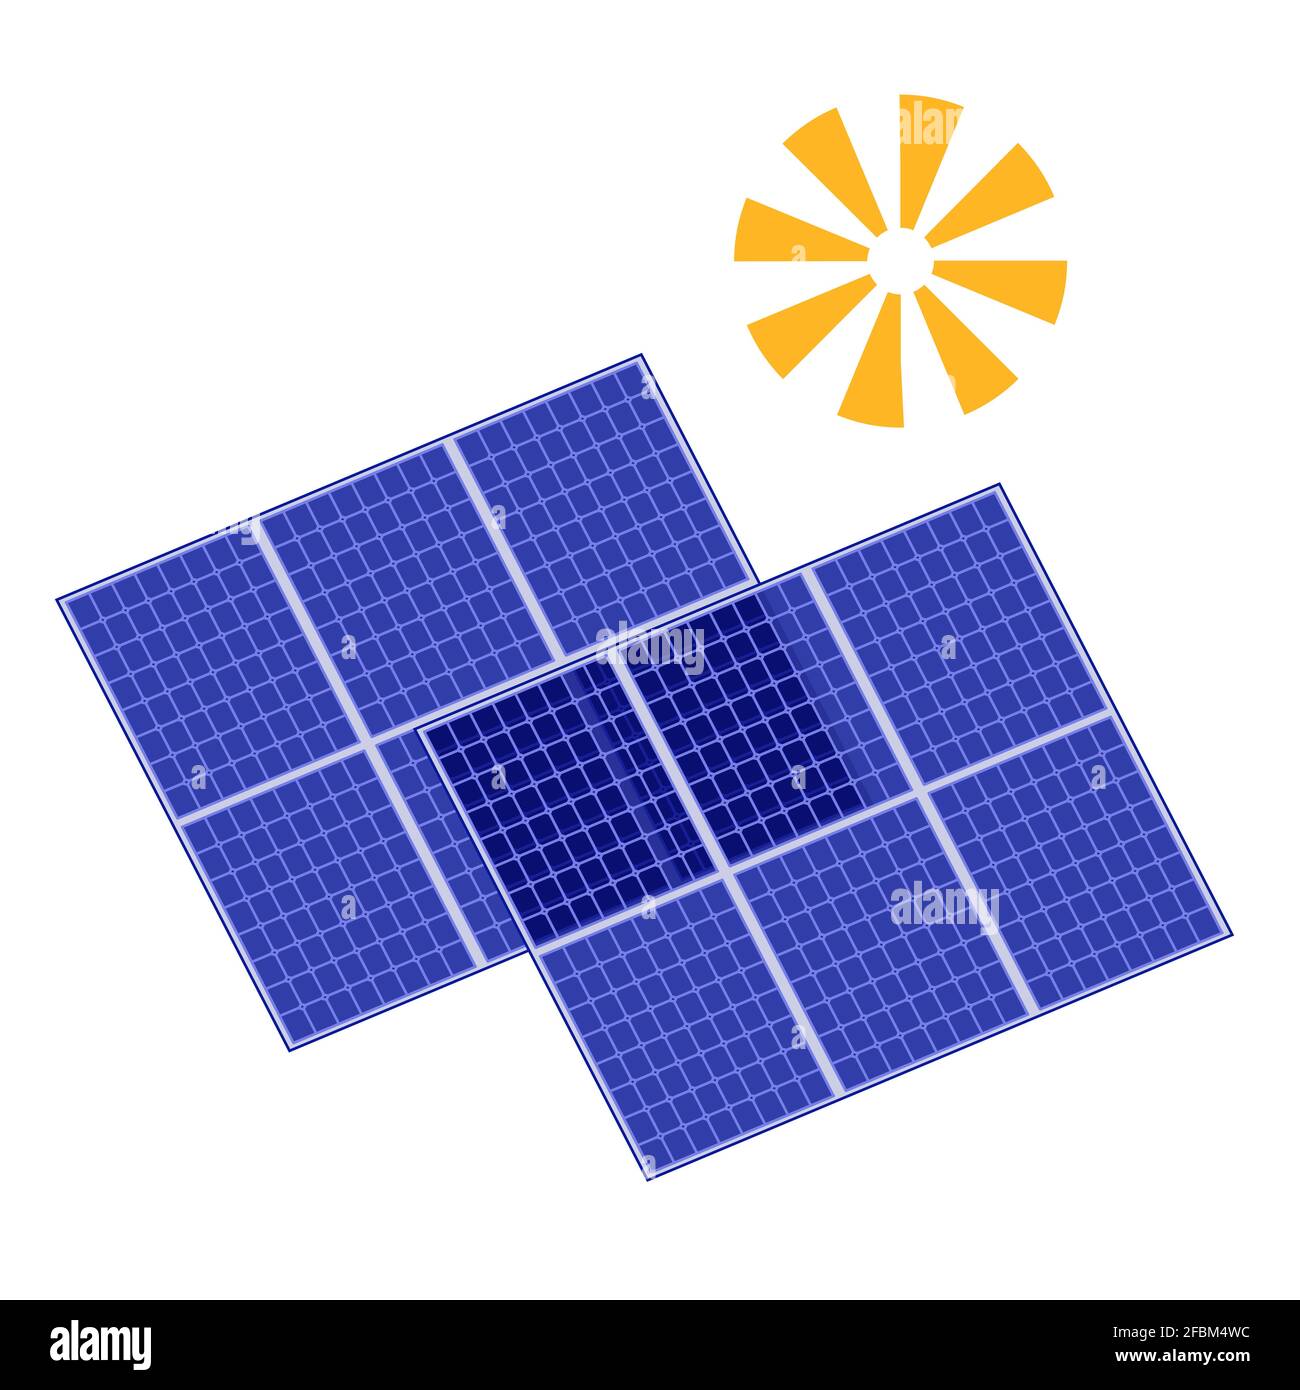 Solar Panels vector illustration, energy of sun icon, alternative green renewable energy source, solar electricity. Stock Vector